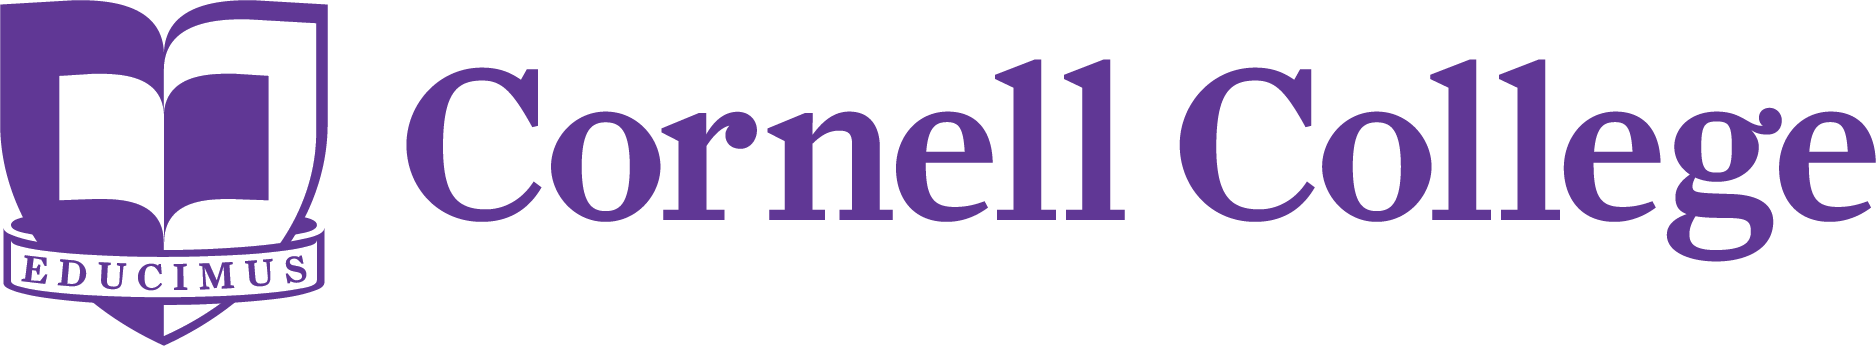 cornel college logo